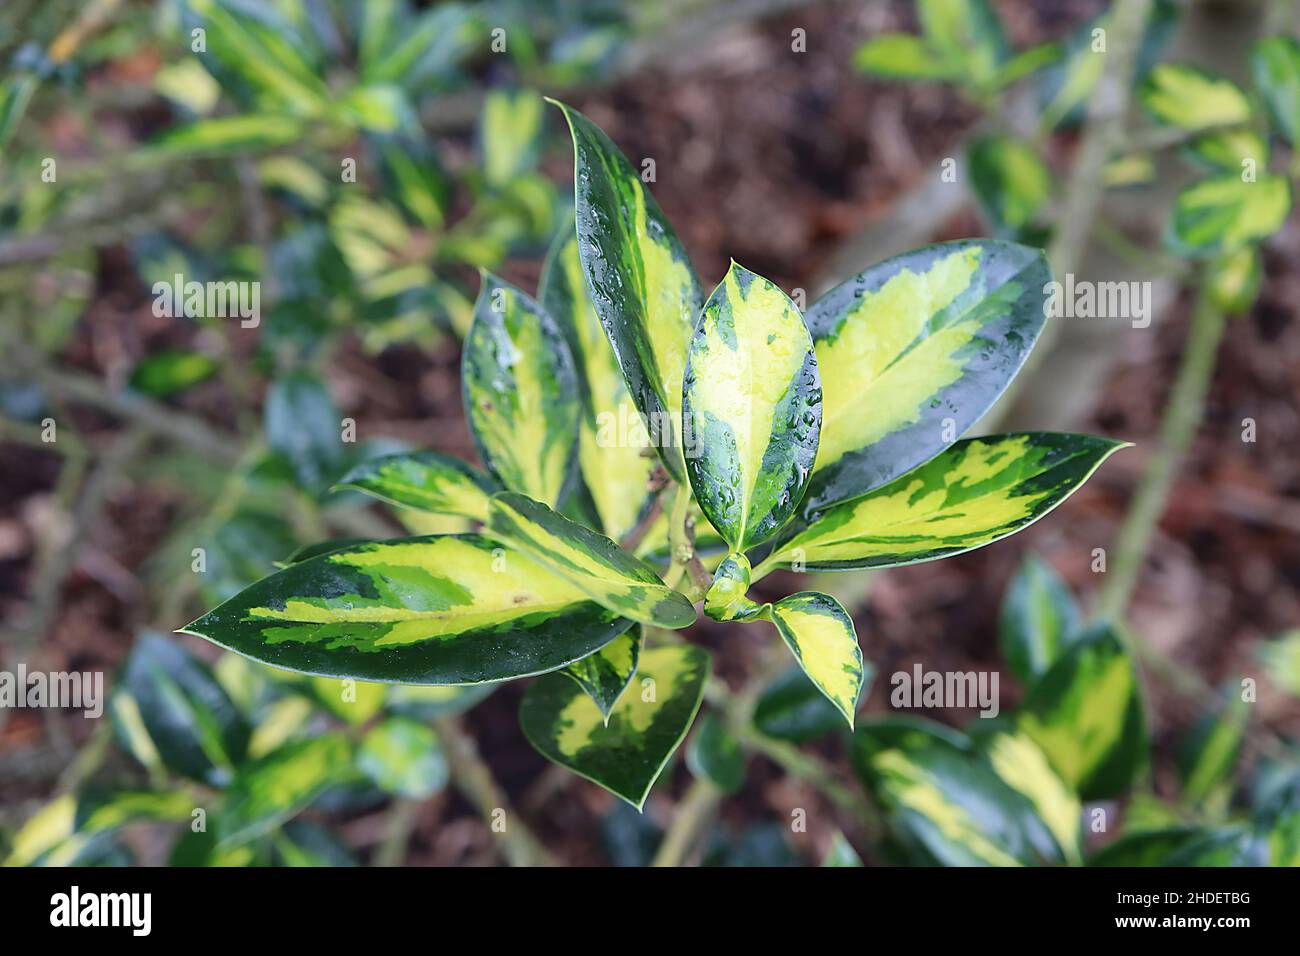 Ilex aquifolium ‘Gold Flash’ holly Gold Flash – elliptic dark green leaves with gold and mid green splashes,  January, England, UK Stock Photo